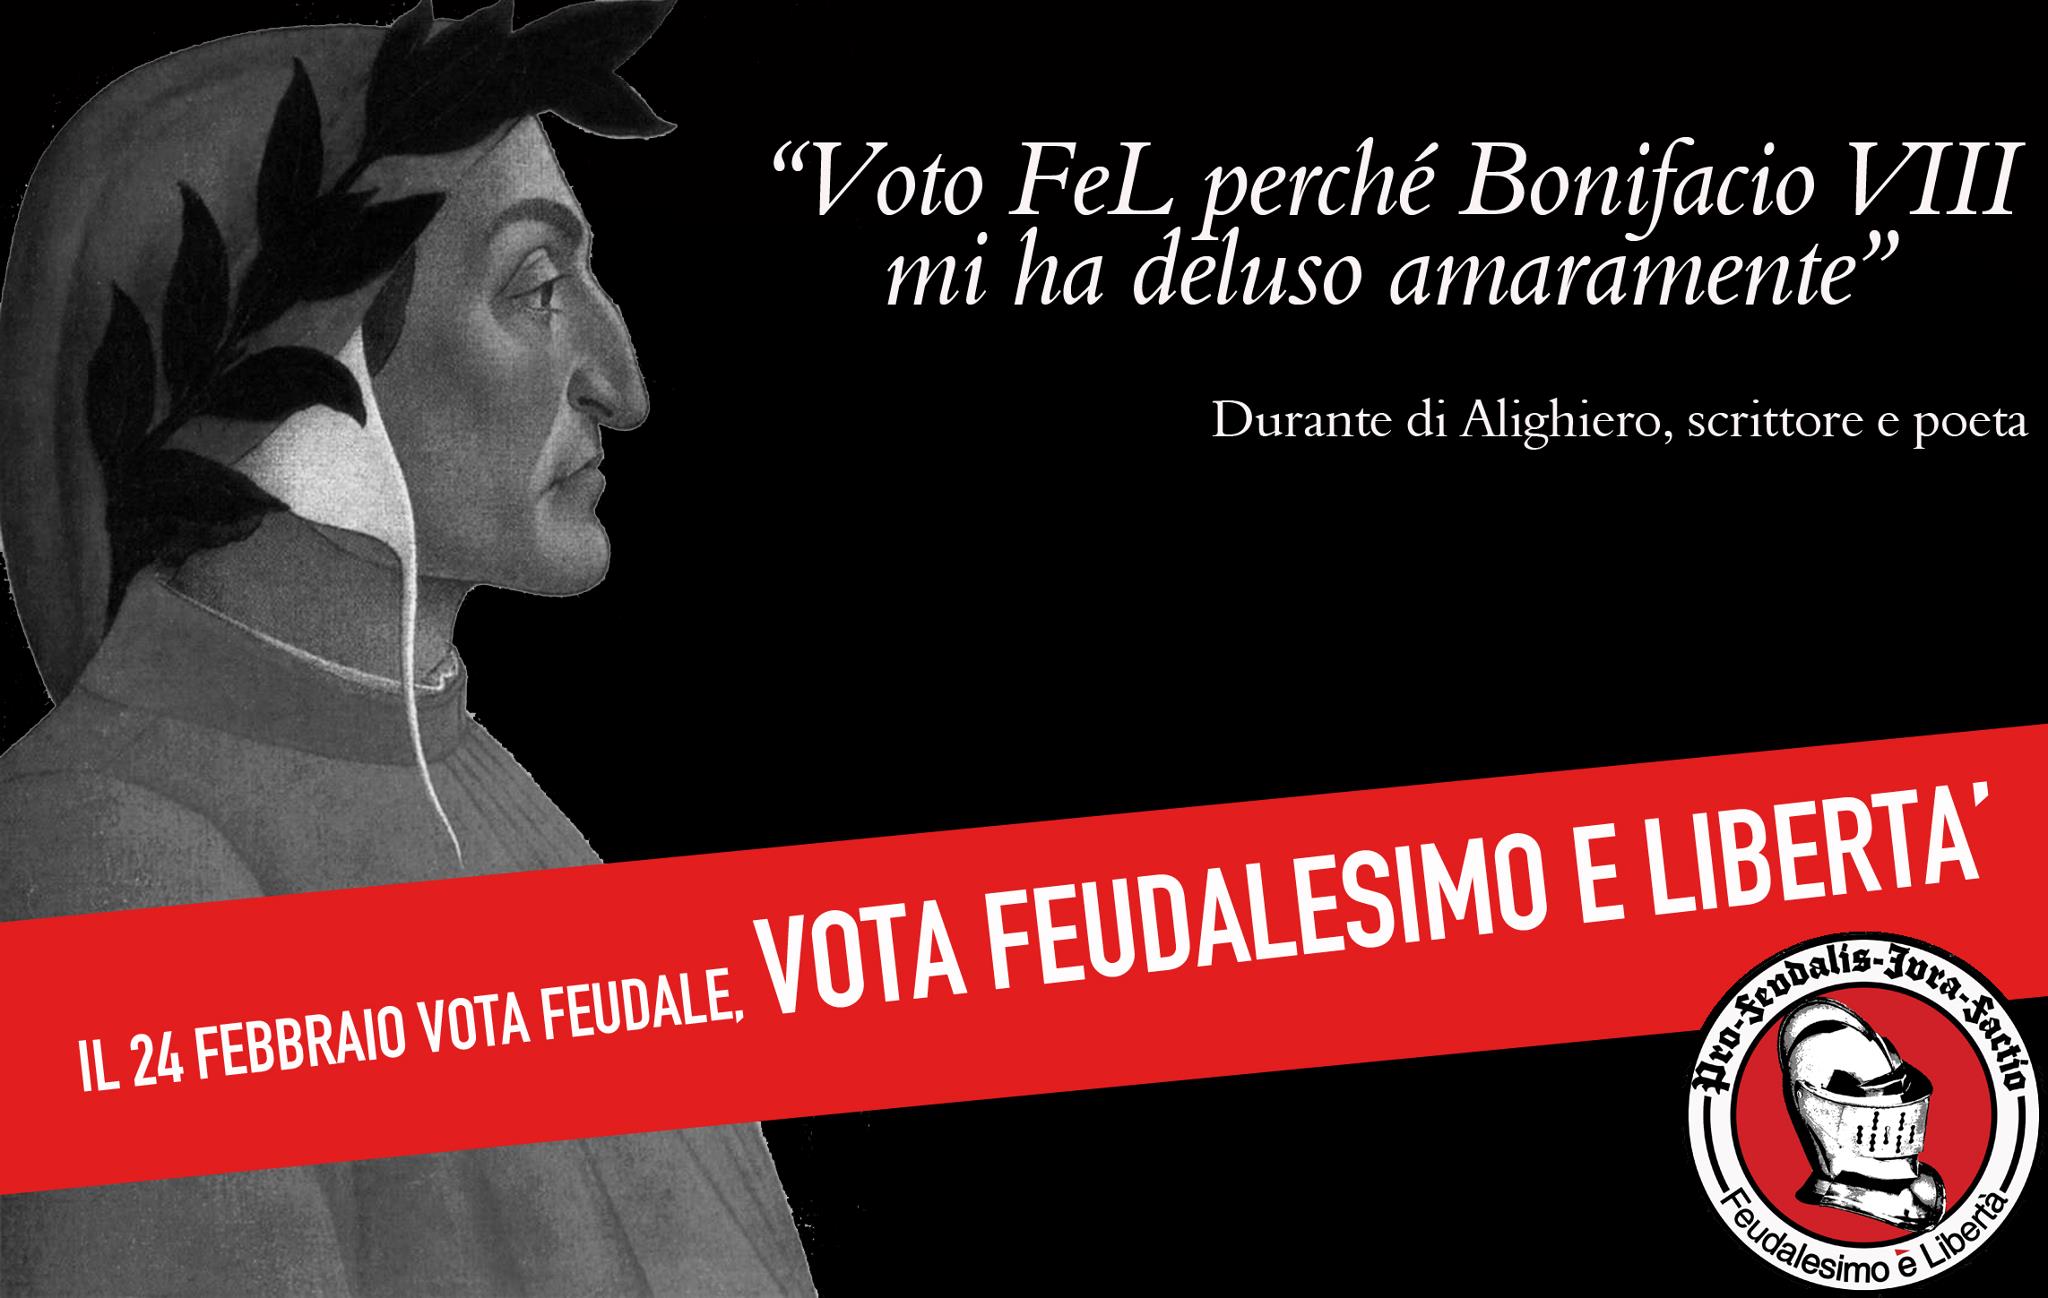 L'endorsement di Dante per Feudalesimo e Libertà